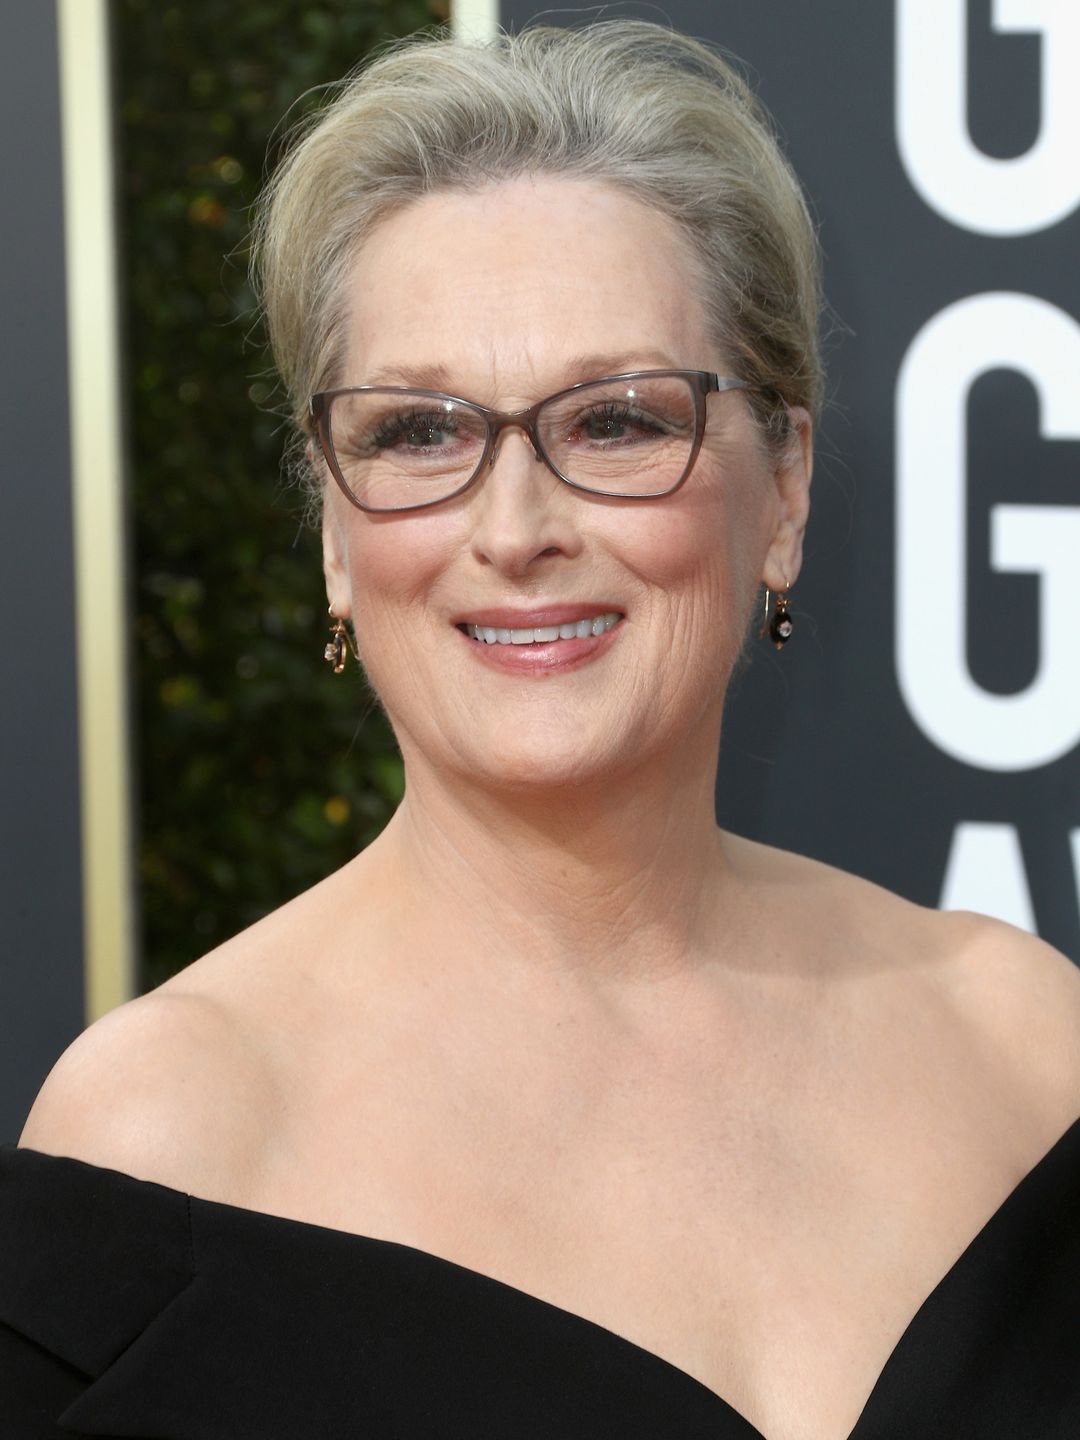 Meryl Streep does she have a husband